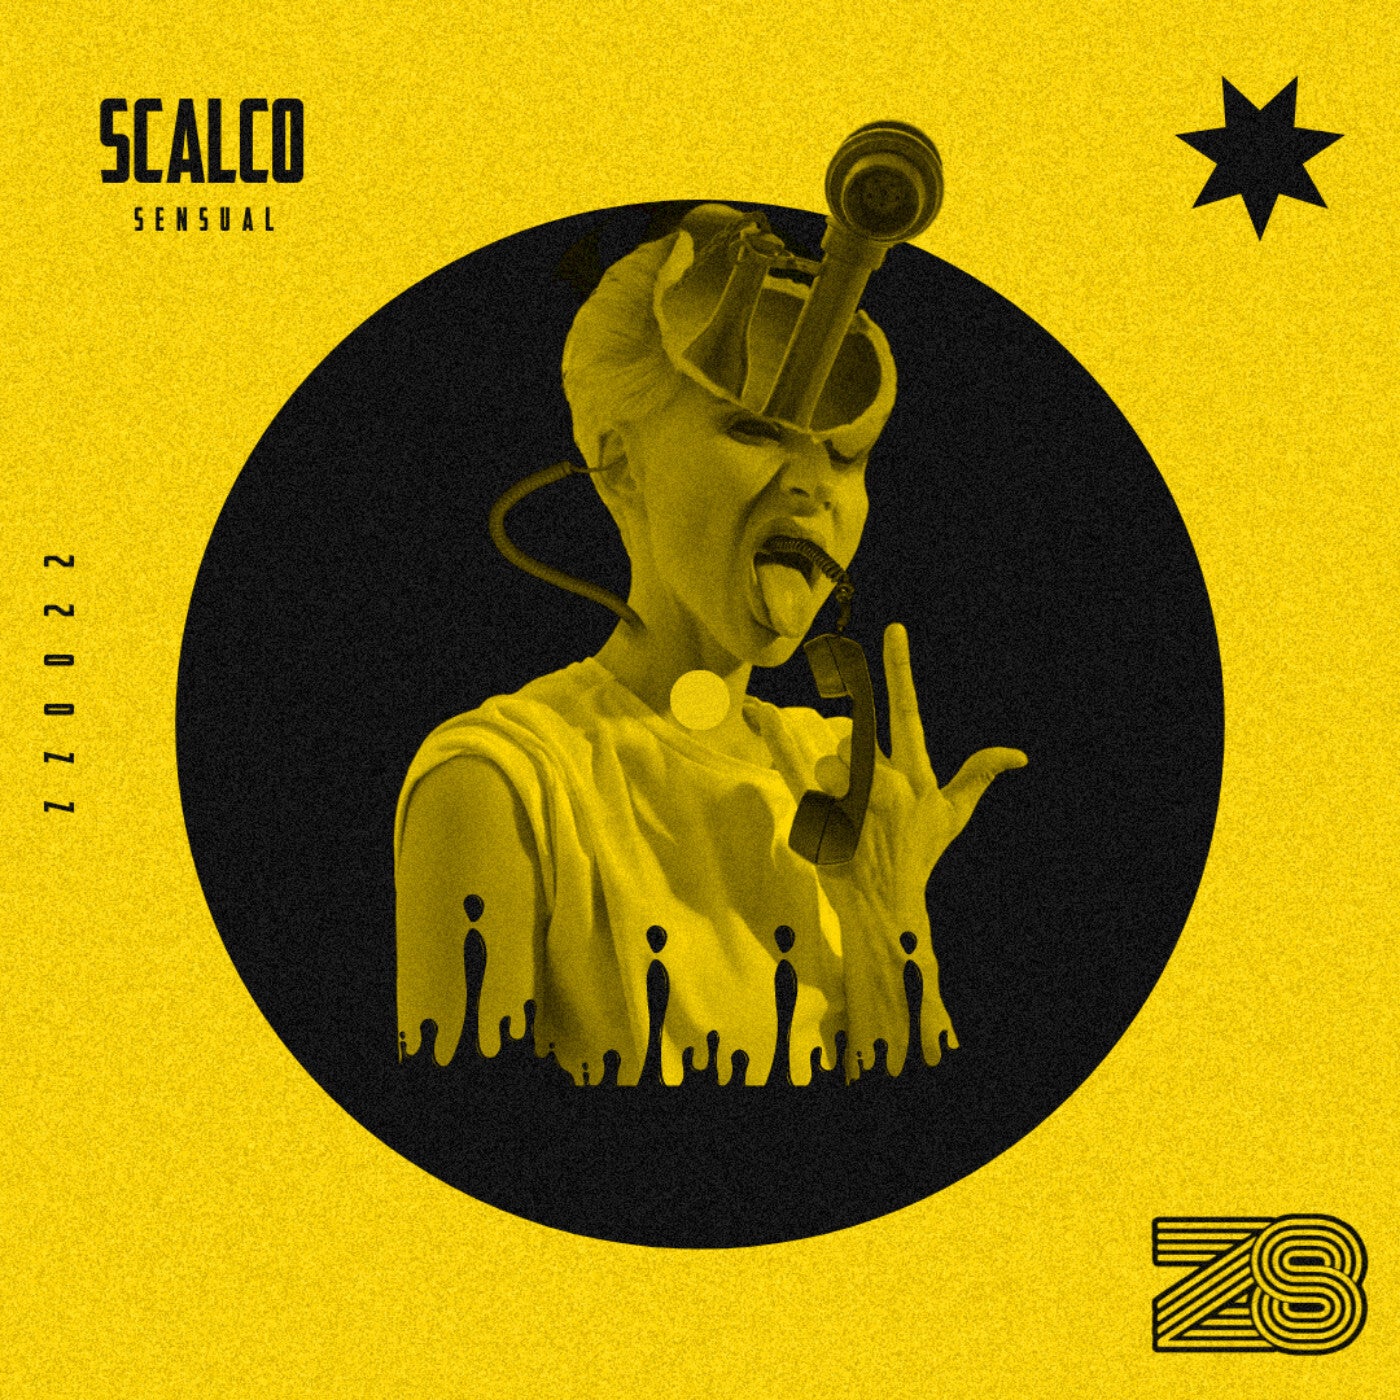 Scalco music download - Beatport